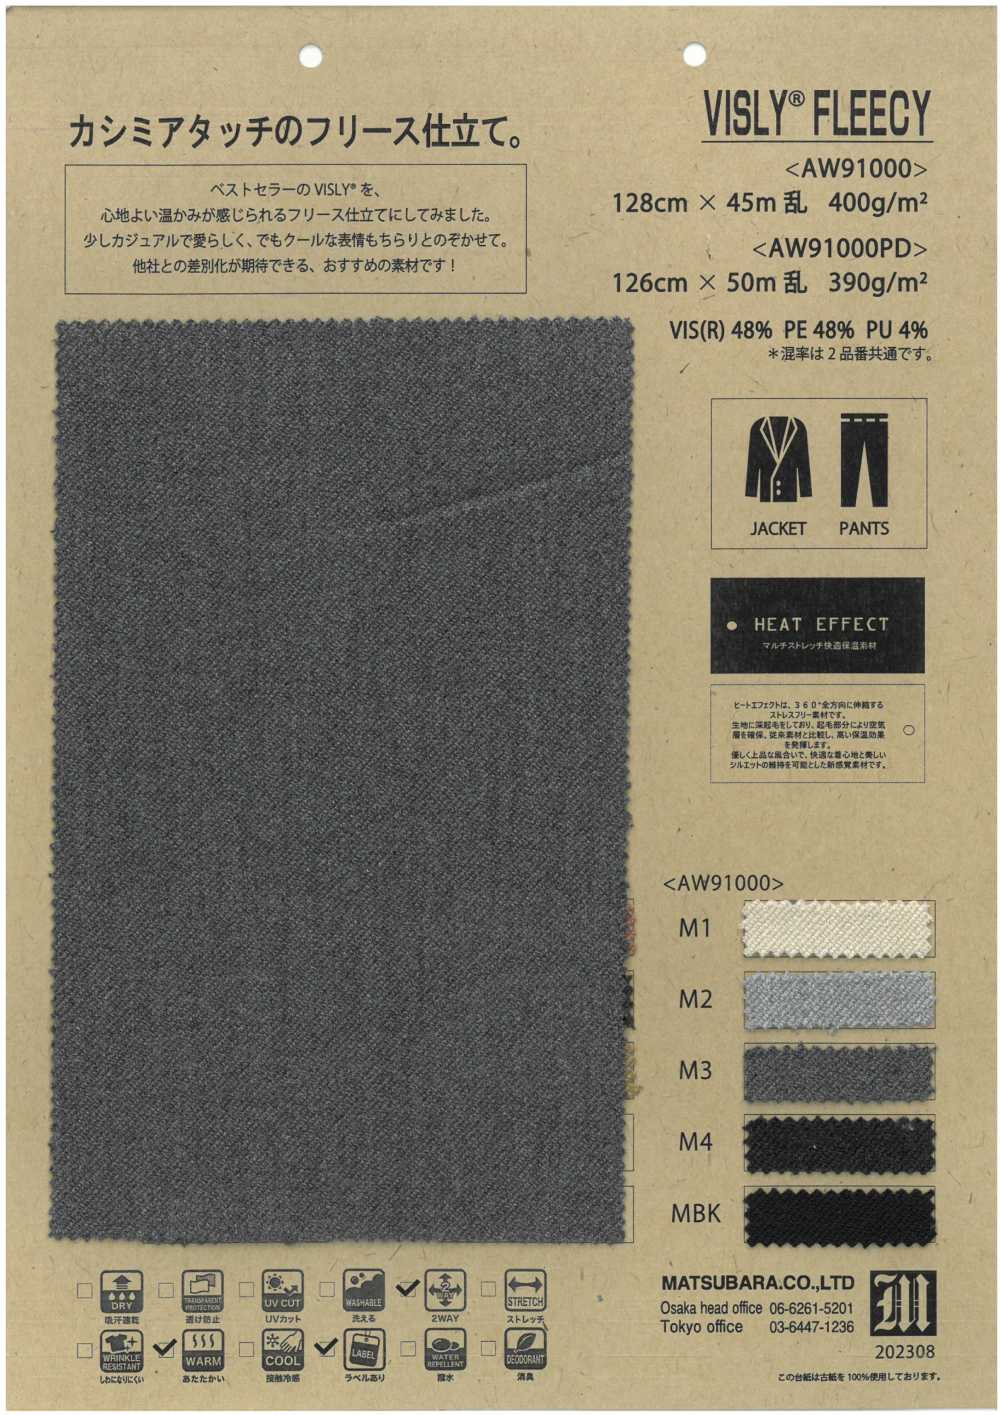 AW91000PD VISLY®️FLEECY[Fabrica Textil] Matsubara